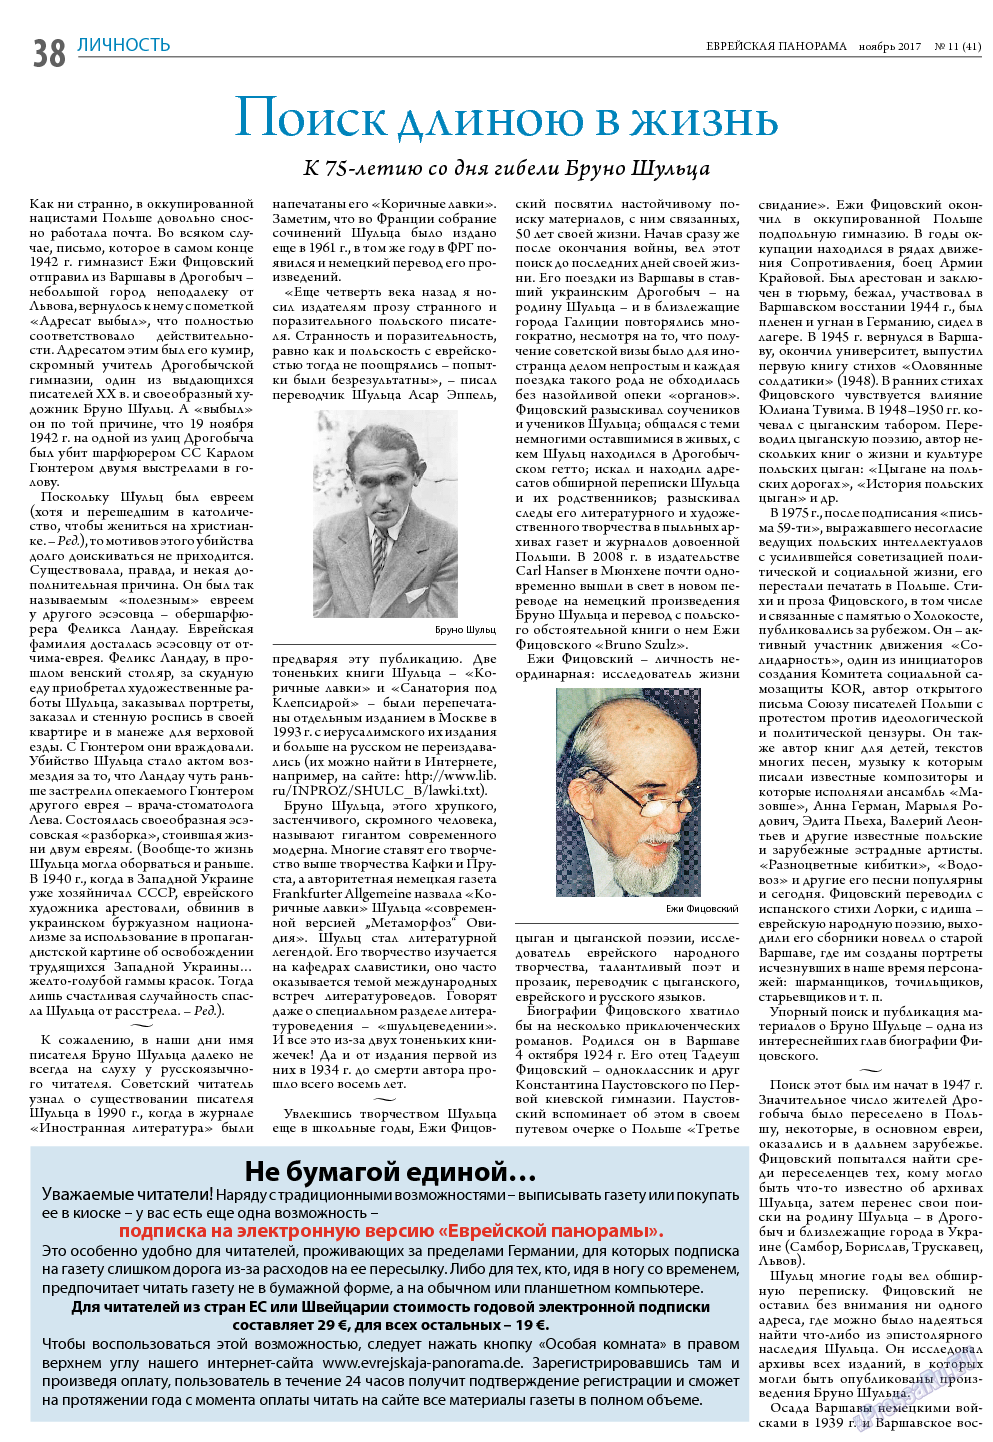 Еврейская панорама, газета. 2017 №11 стр.38